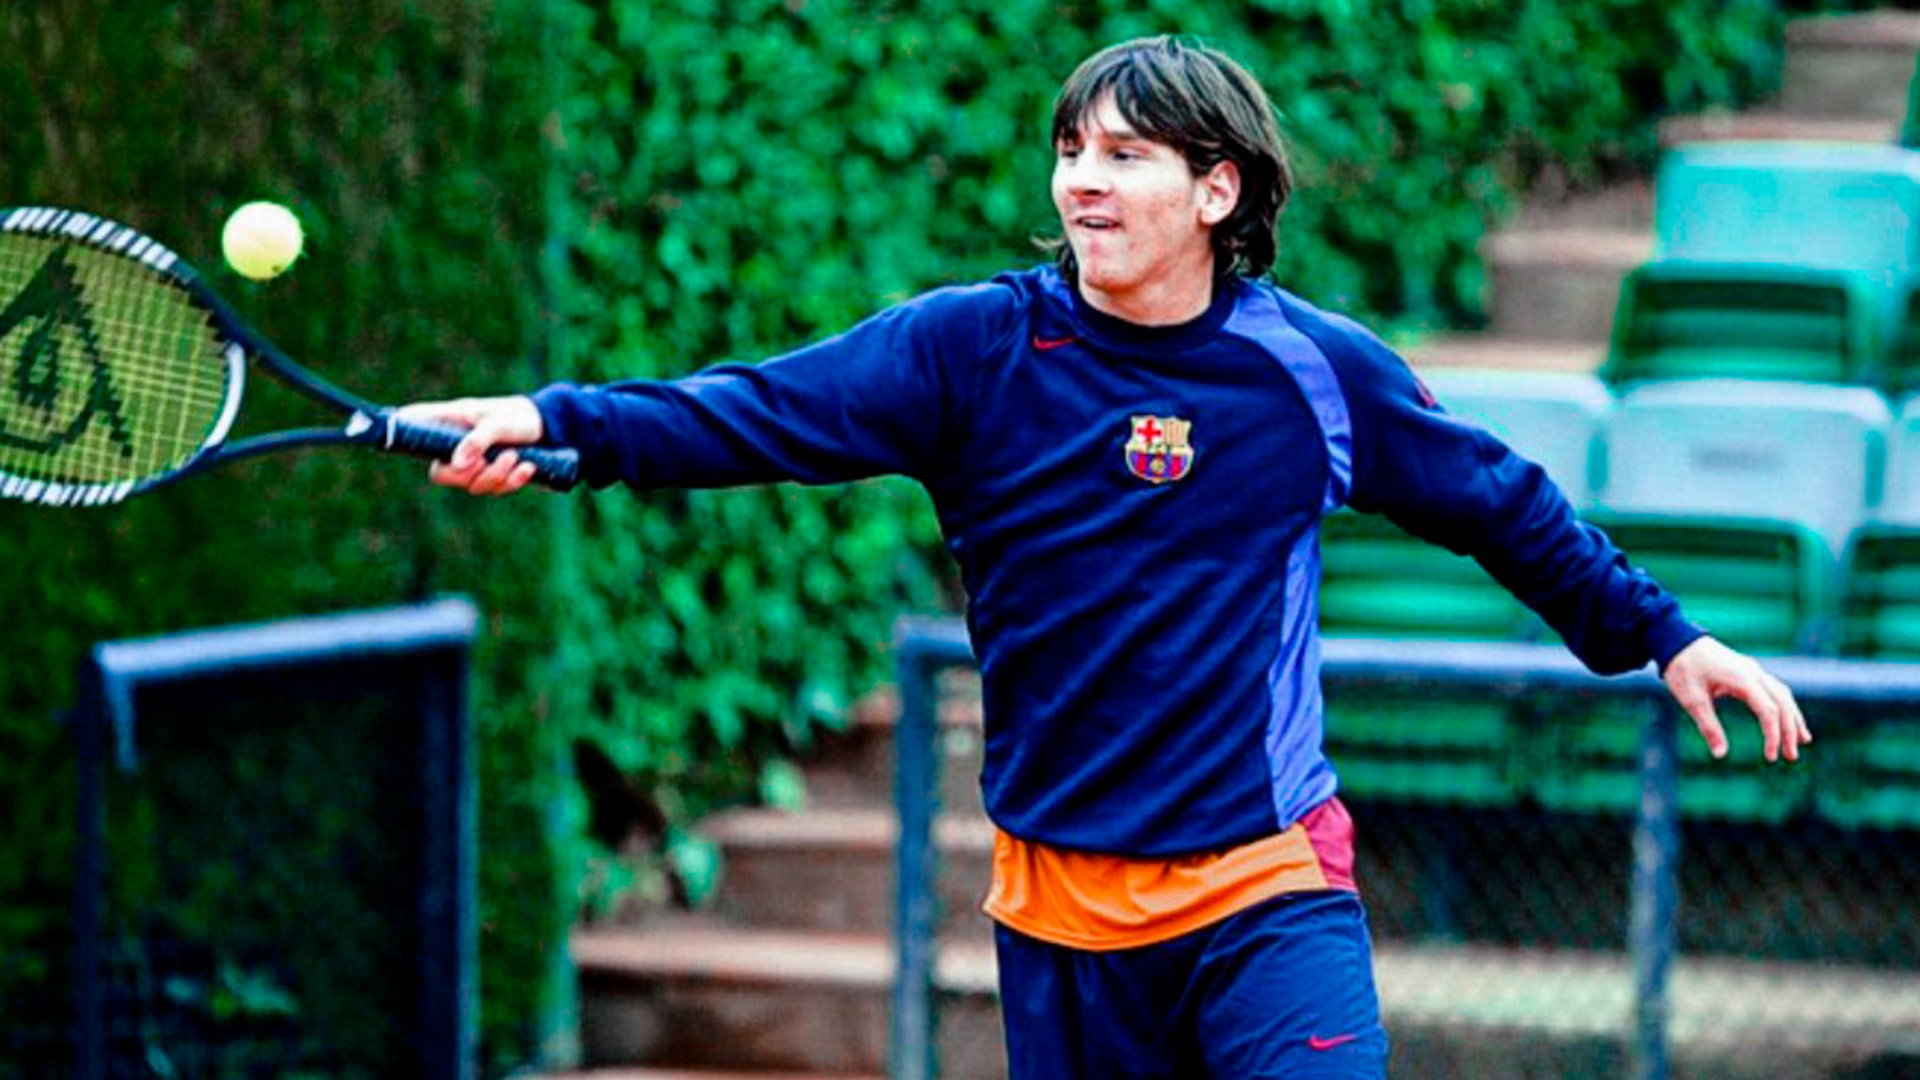 ESPN Tenis on Twitter: "¿Y la raqueta? ¡Felices 35 años, Lionel Messi! 🇦🇷🔟⚽ https://t.co/O5pwqur5JJ" Twitter